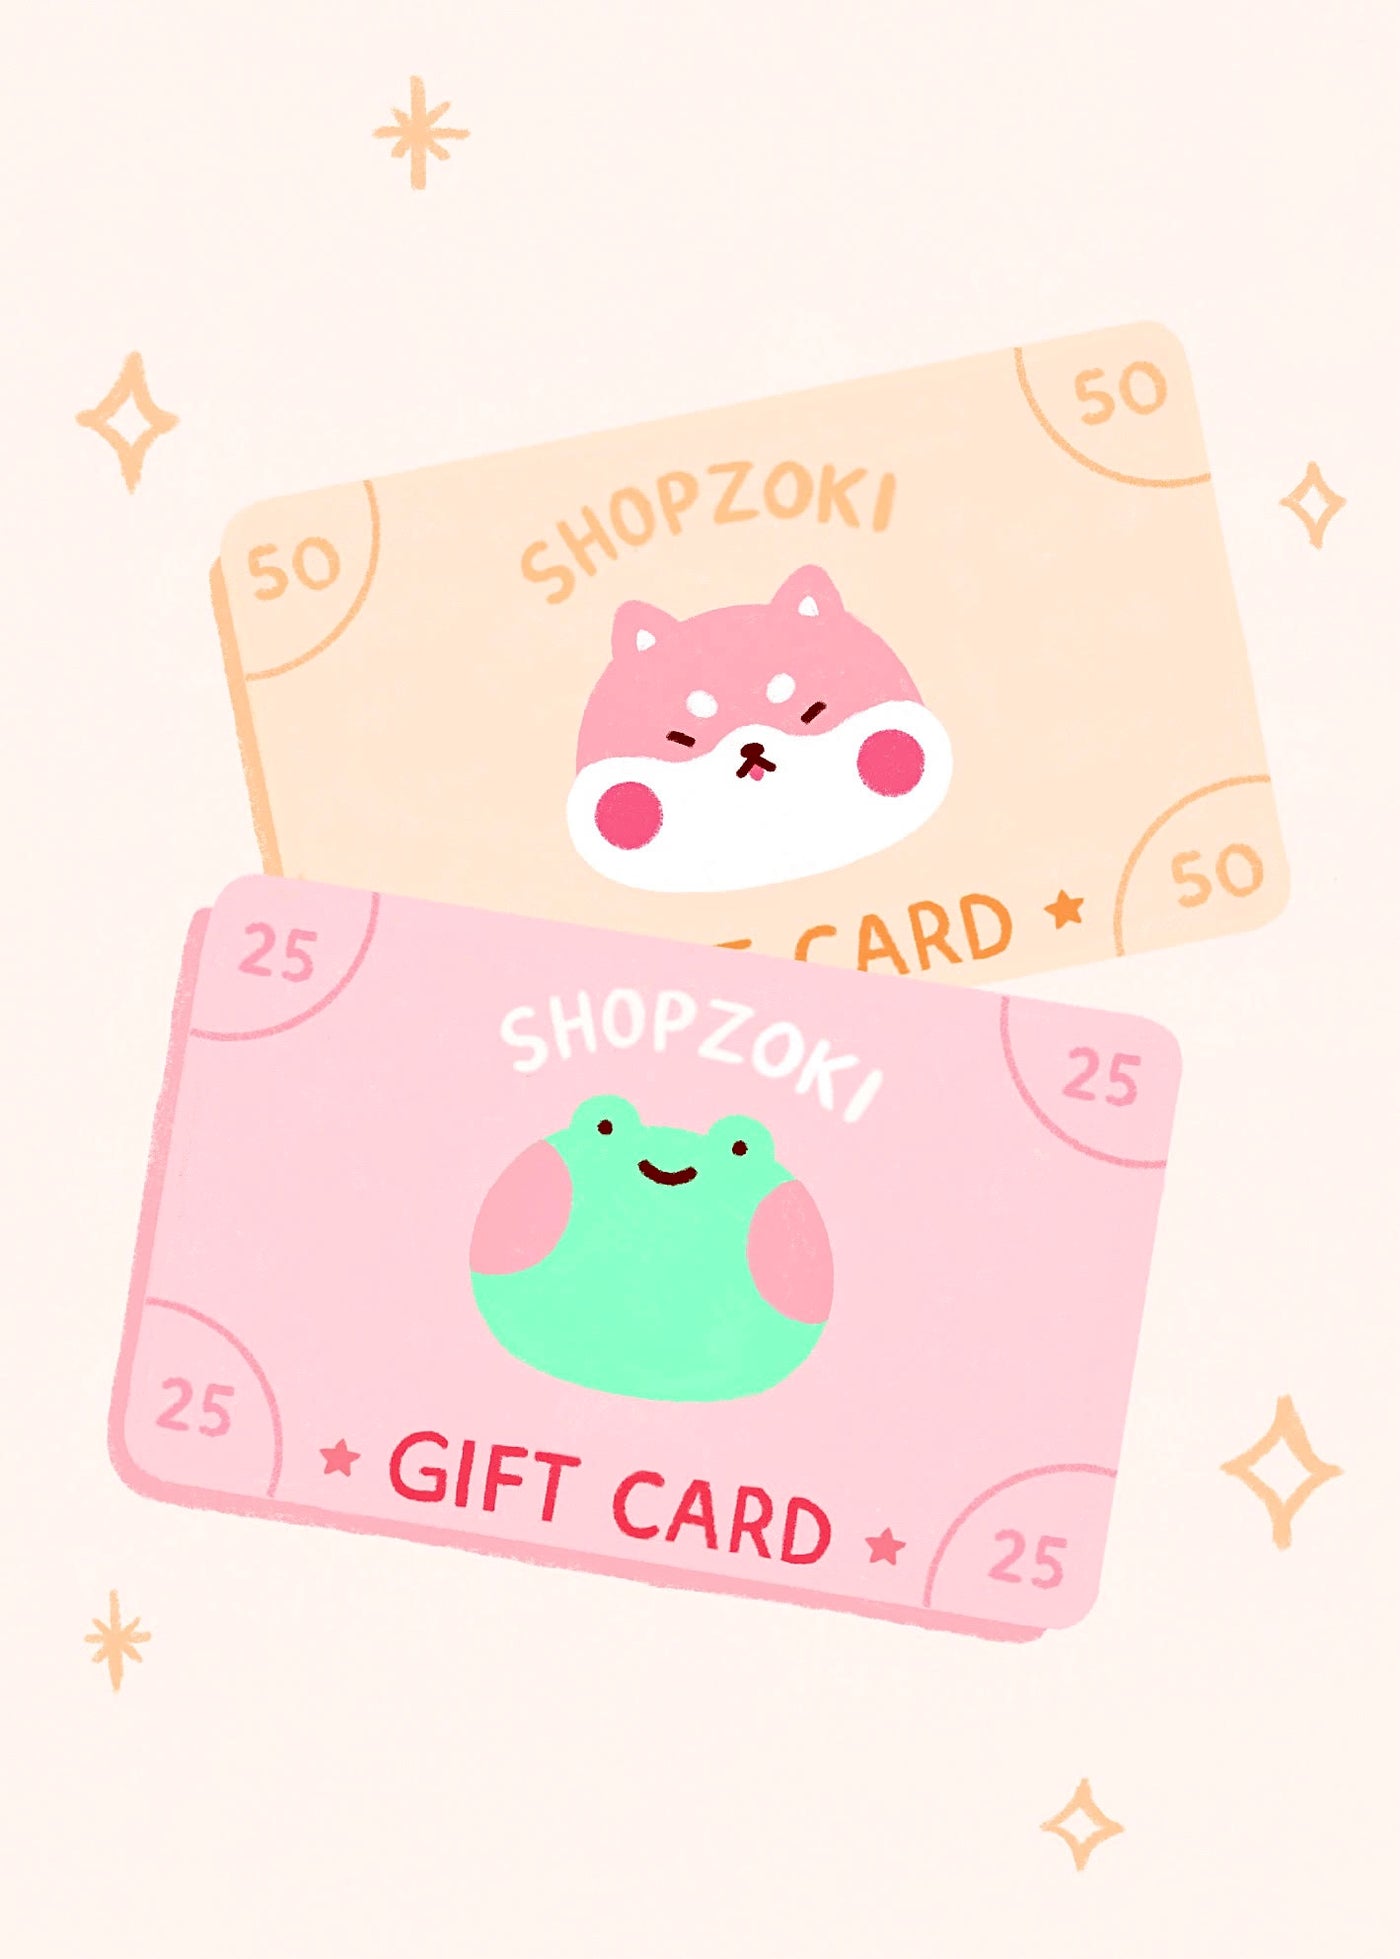 Digital Gift Card - Shopzoki